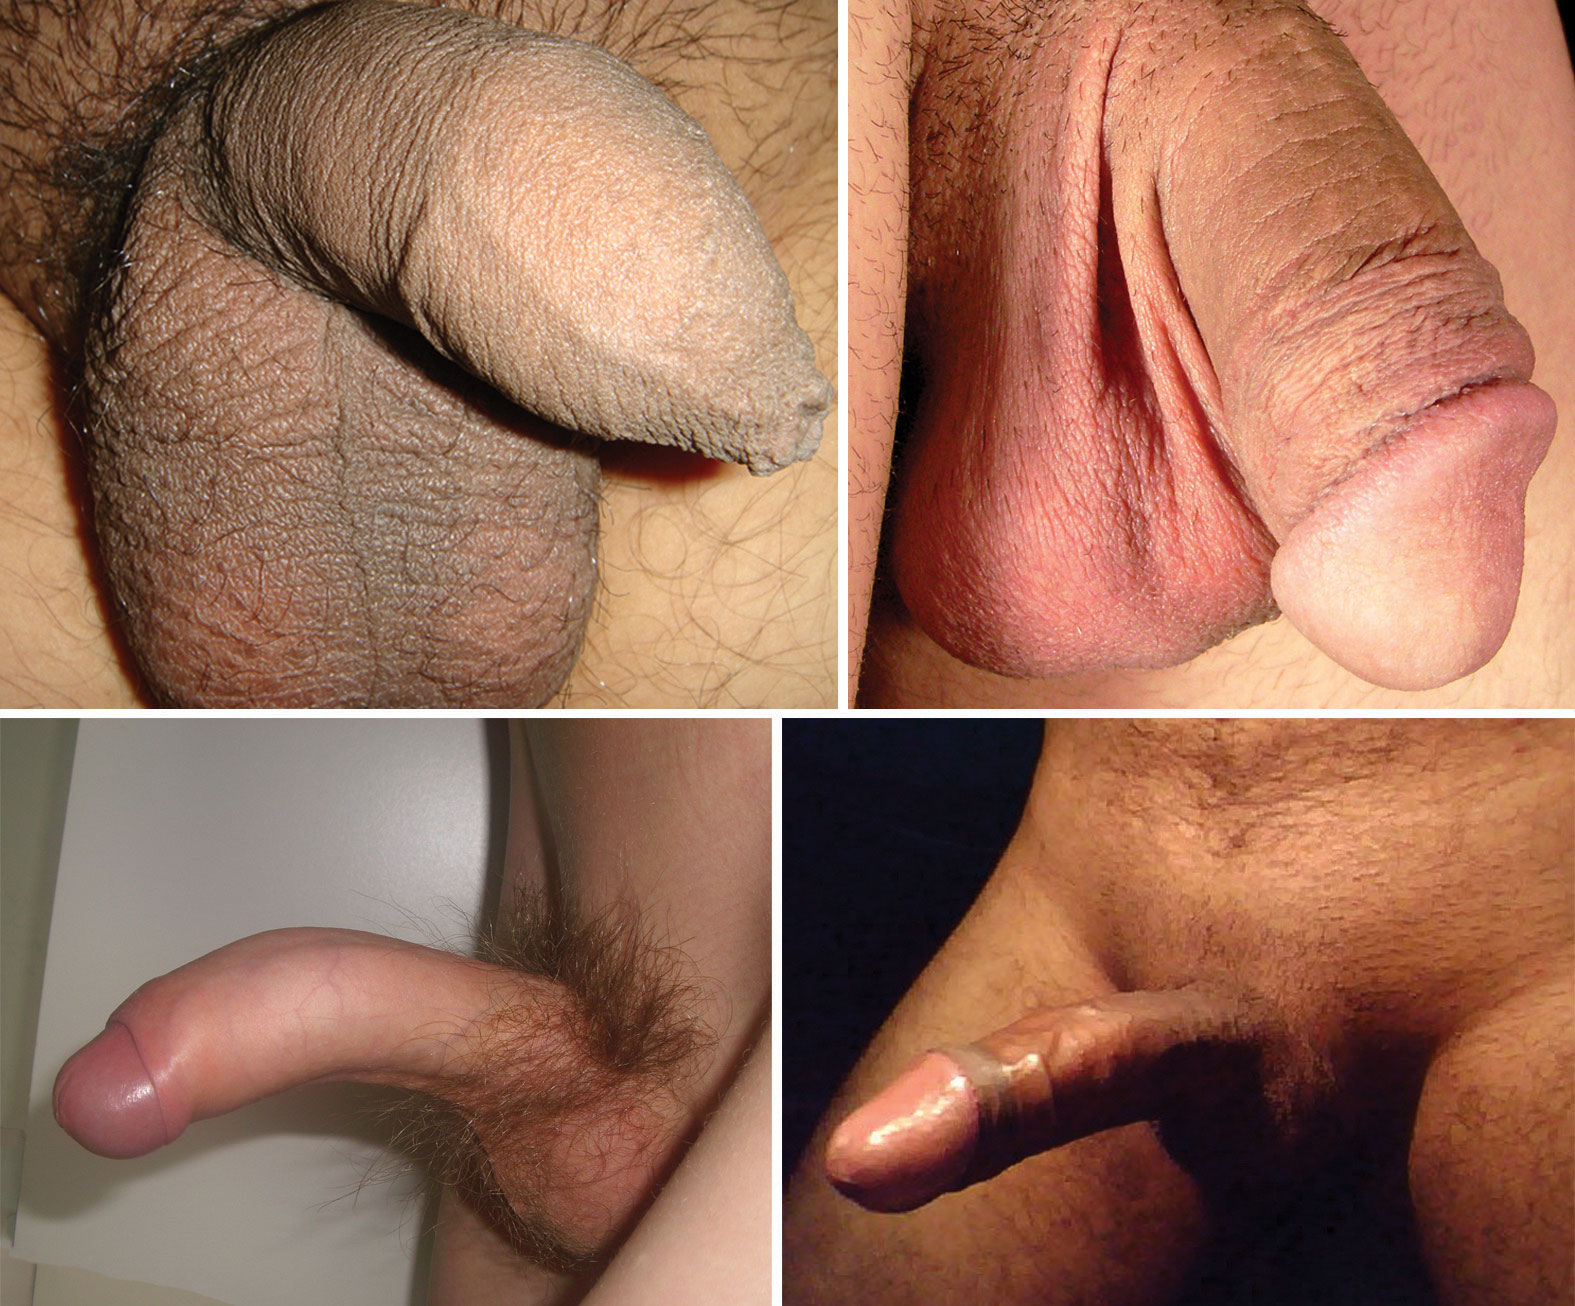 Uncircumcised men naked